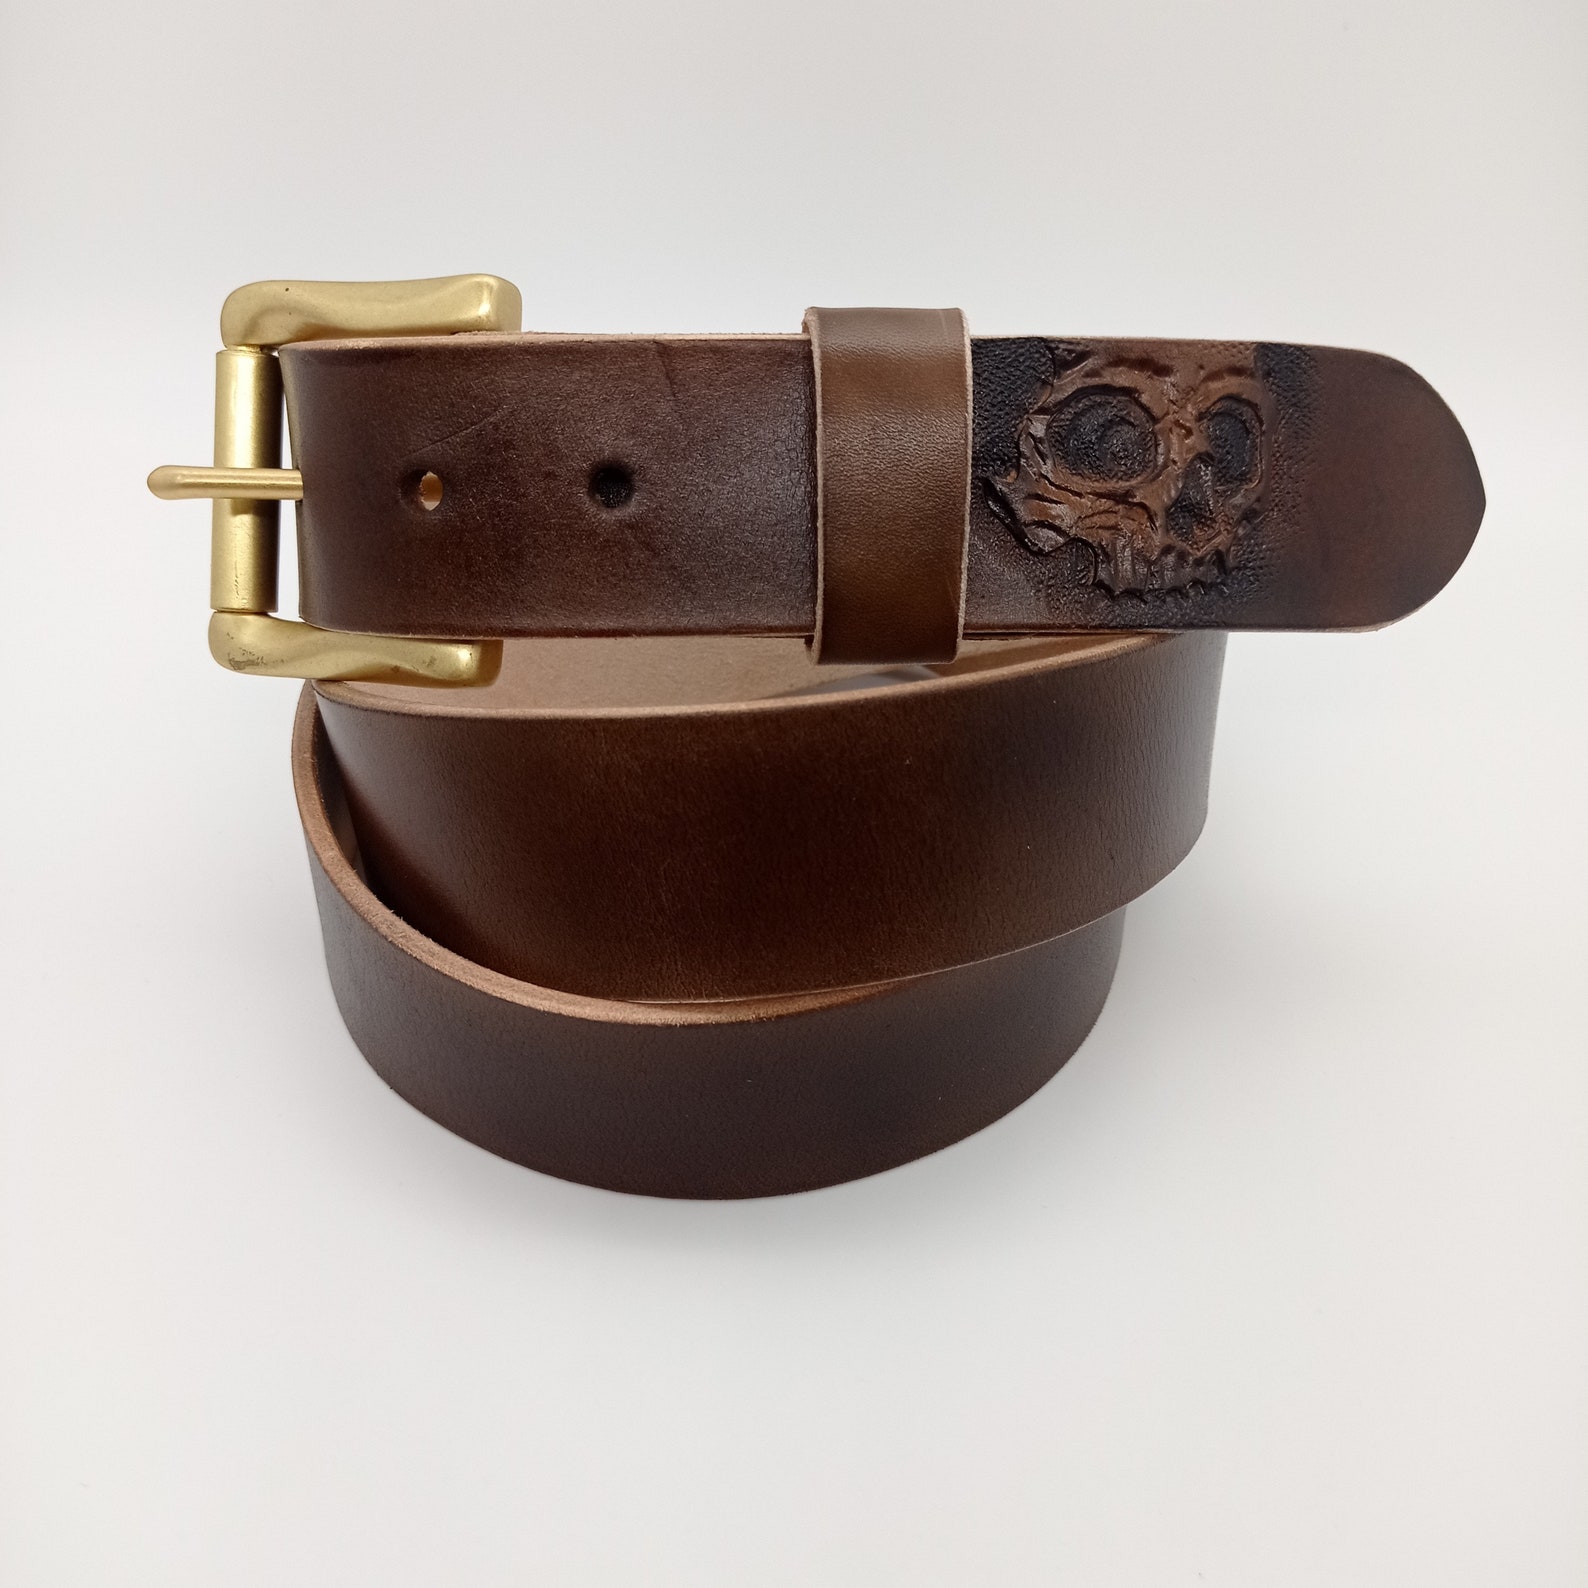 Handmade hand-tooled leather Skull Belt leather belt Brown | Etsy